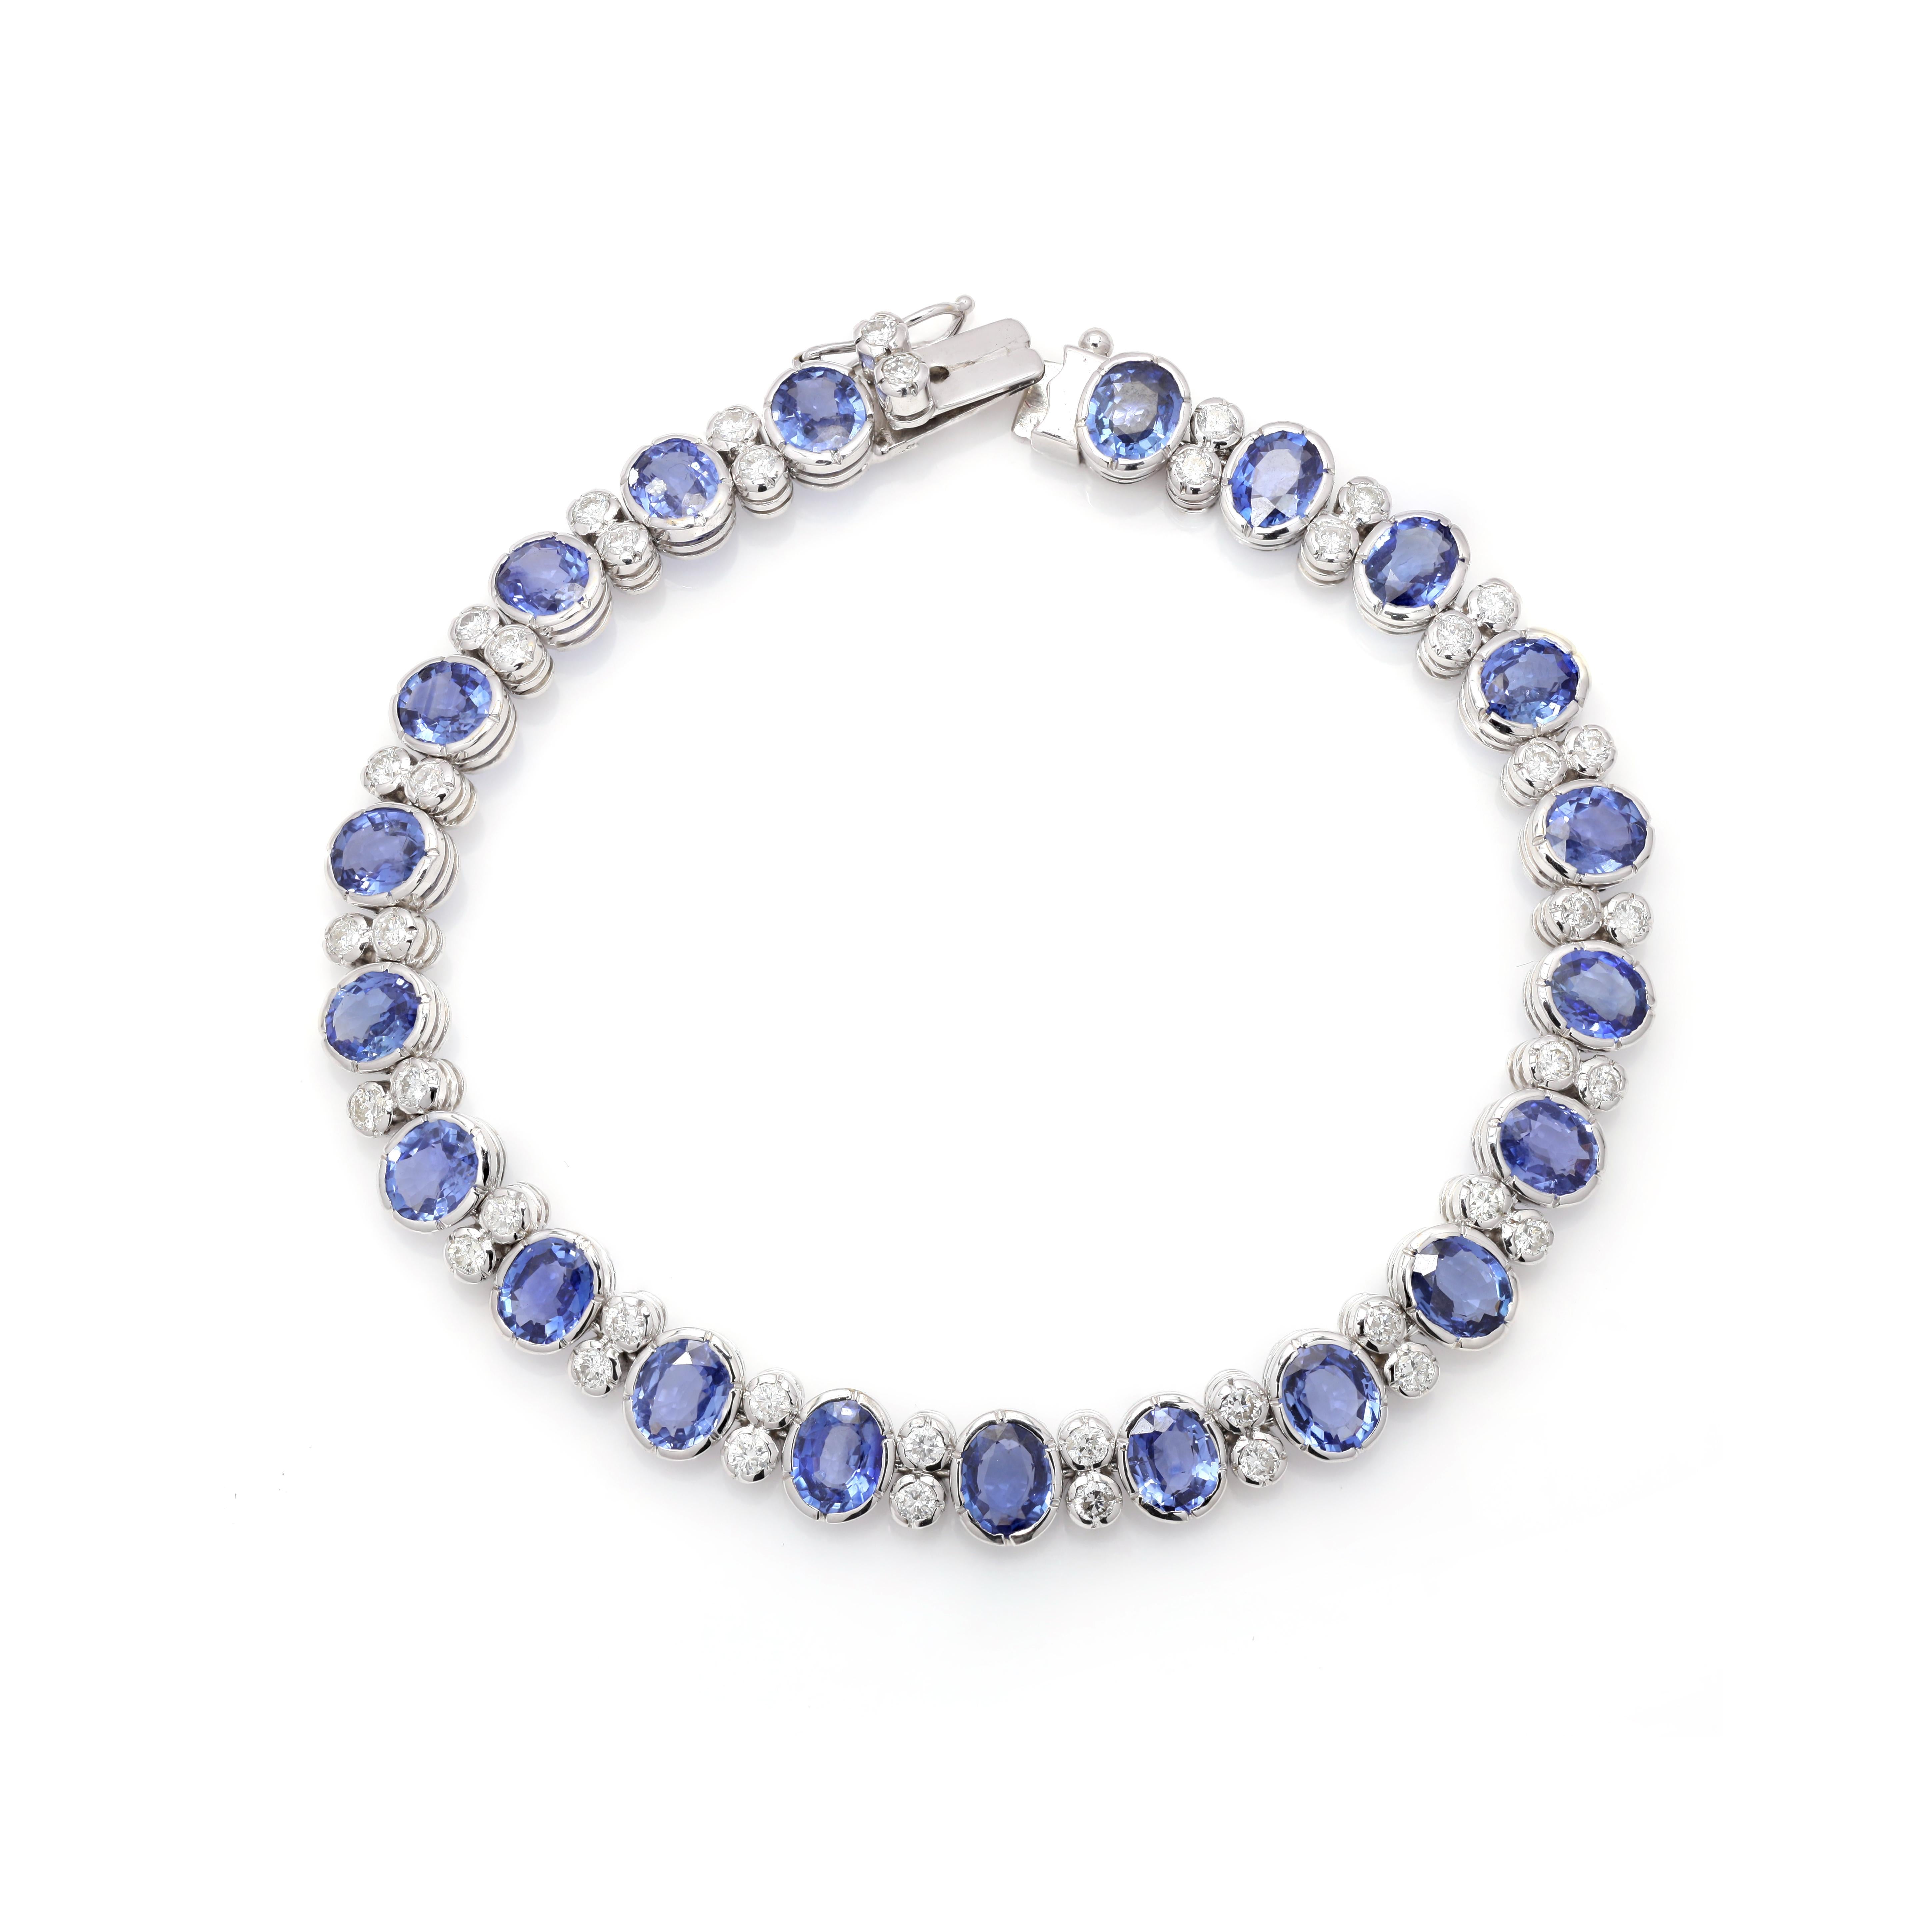 Contemporary 15.45 Carat Blue Sapphire Wedding Bracelet with Diamonds Inset 18K White Gold For Sale